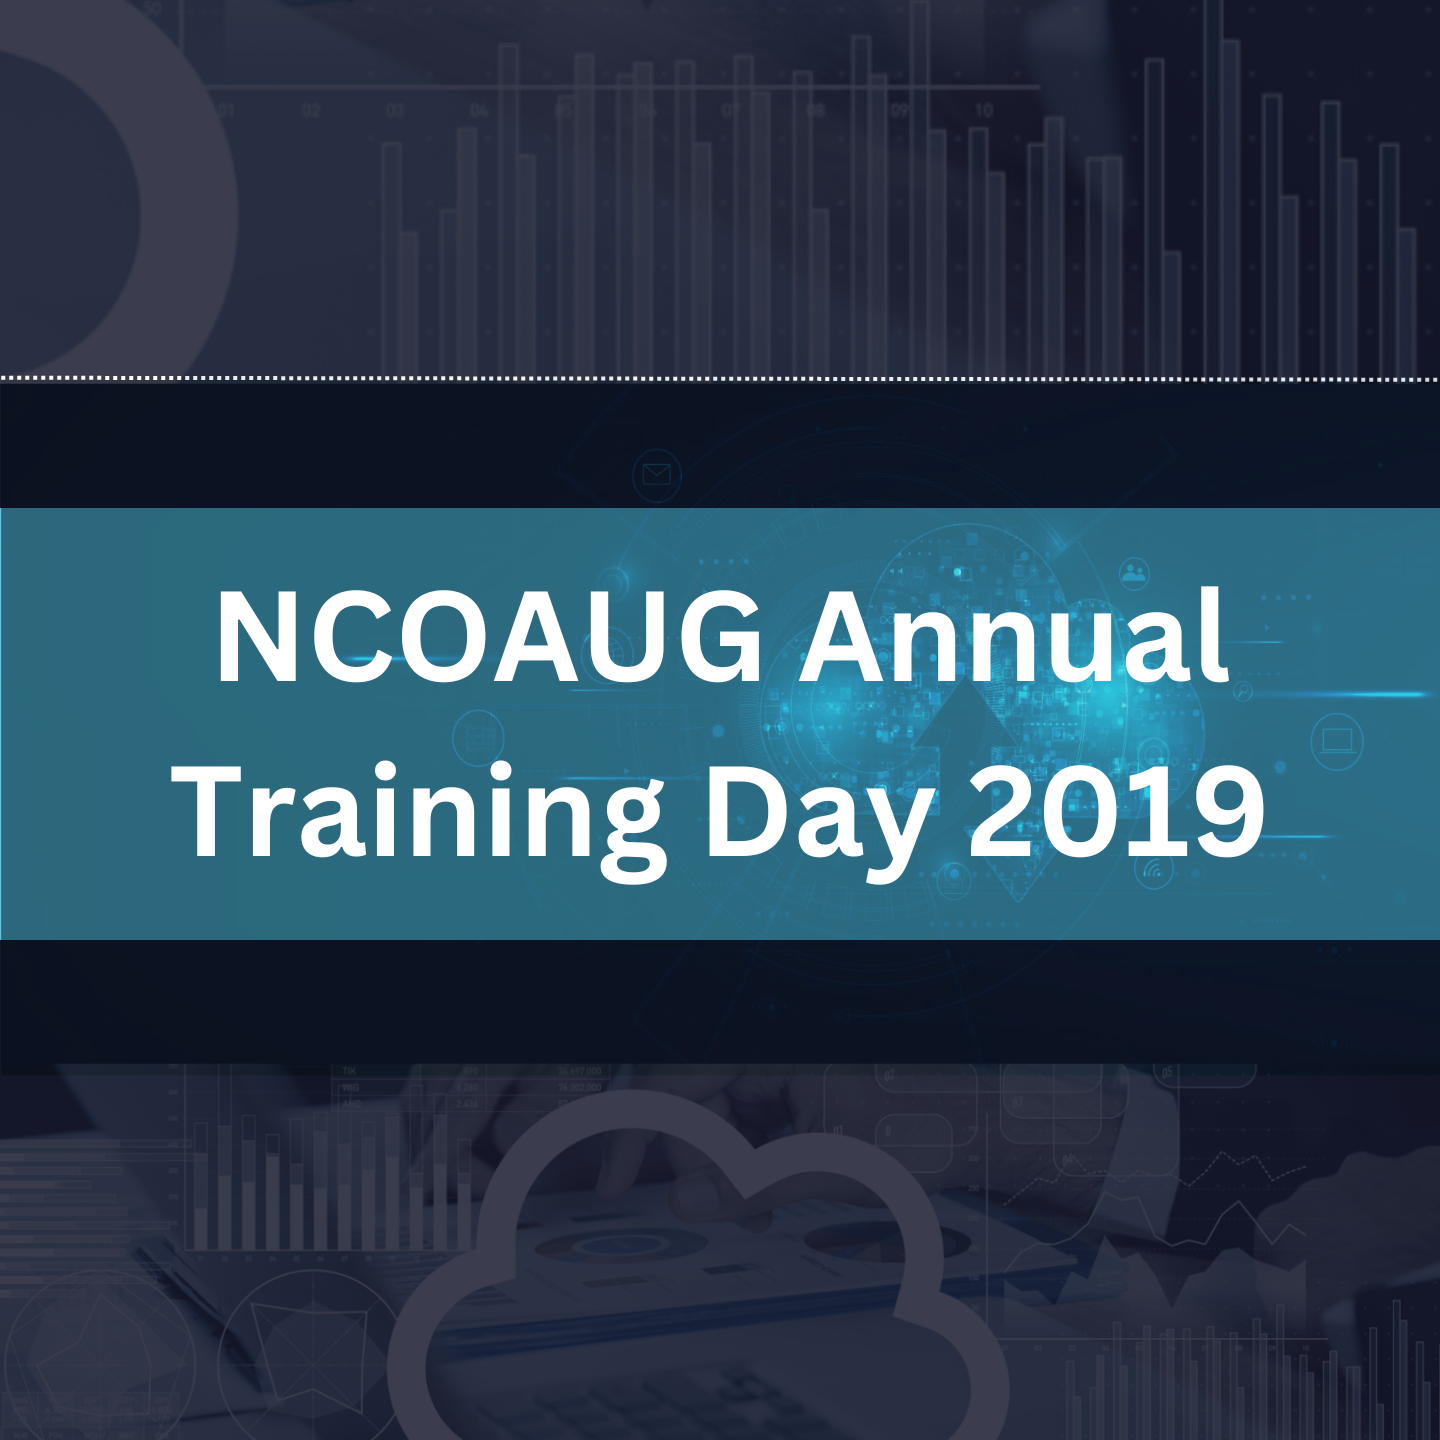 NCOAUG Annual Training Day 2019